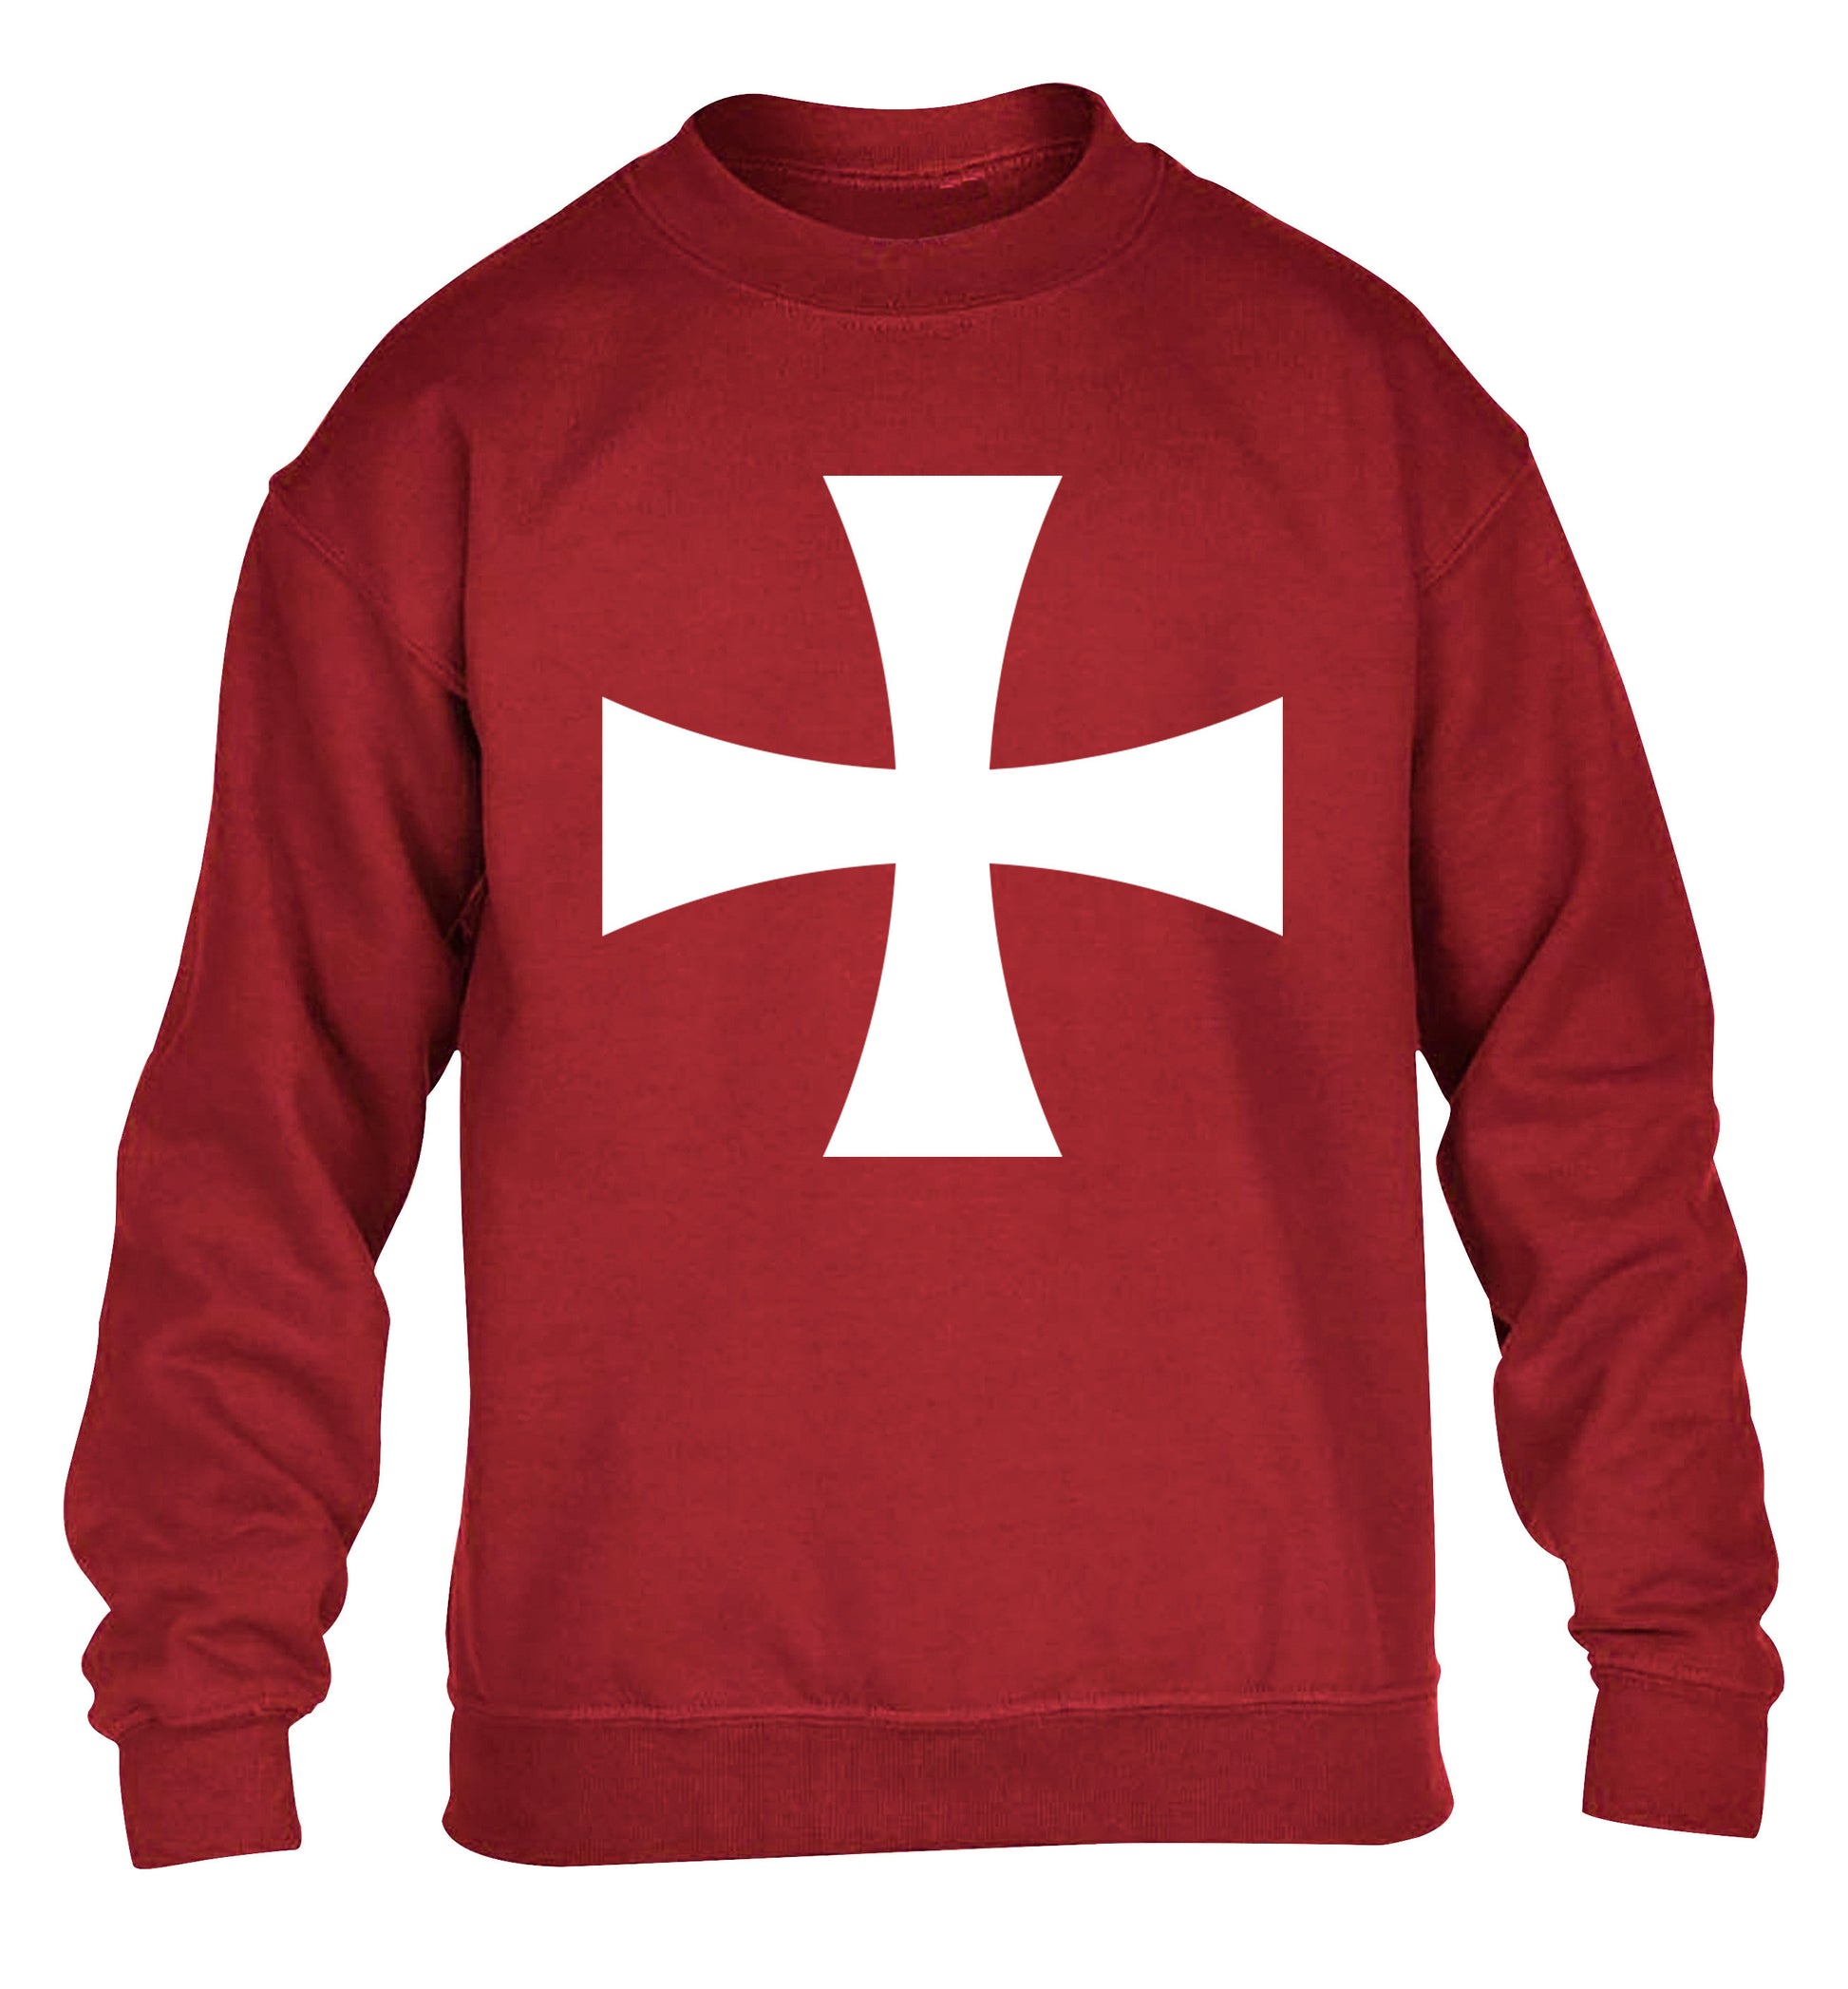 Knights Templar cross children's grey sweater 12-14 Years